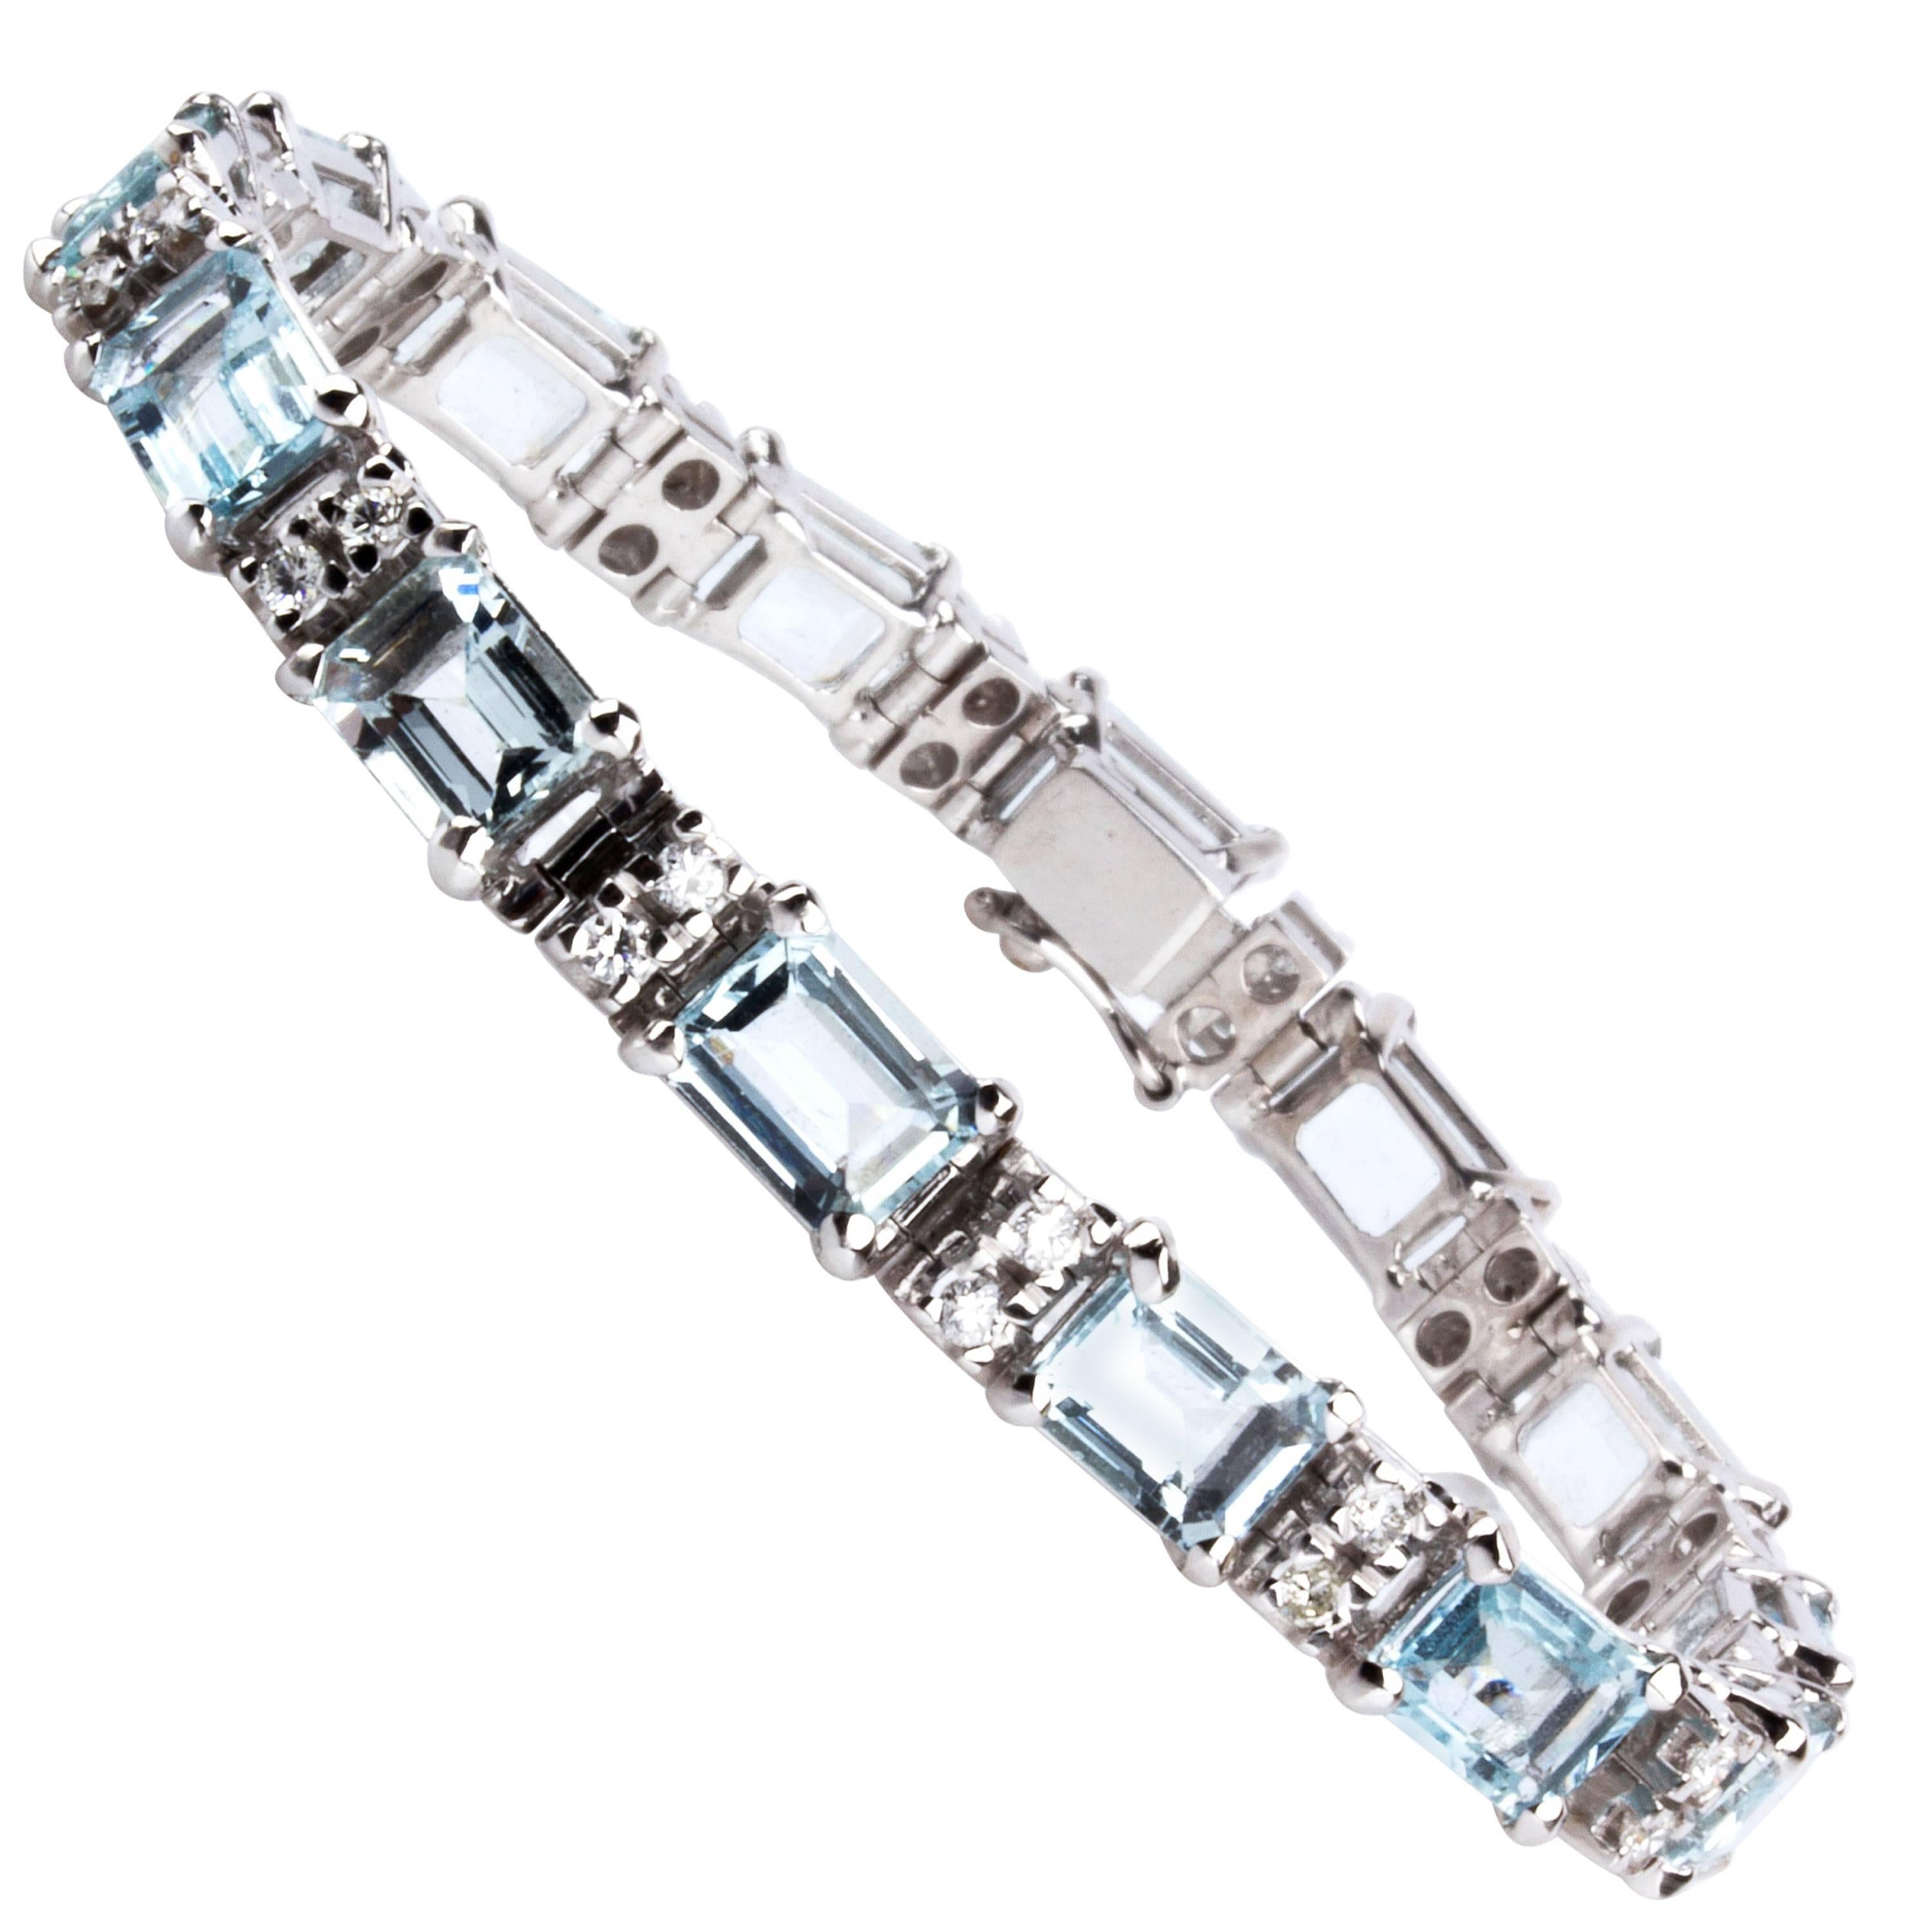 Aquamarine and Diamond Bracelet